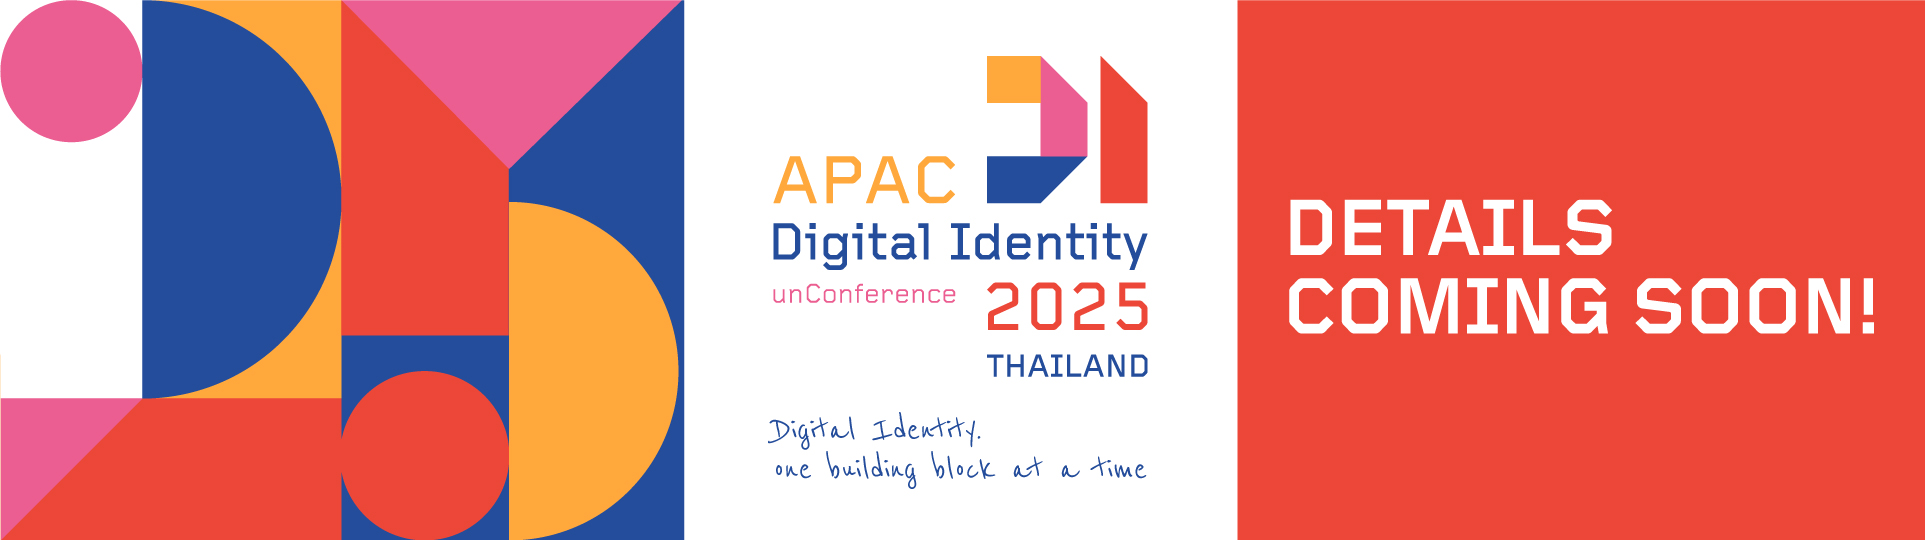 APAC Digital Identity unConference Logo